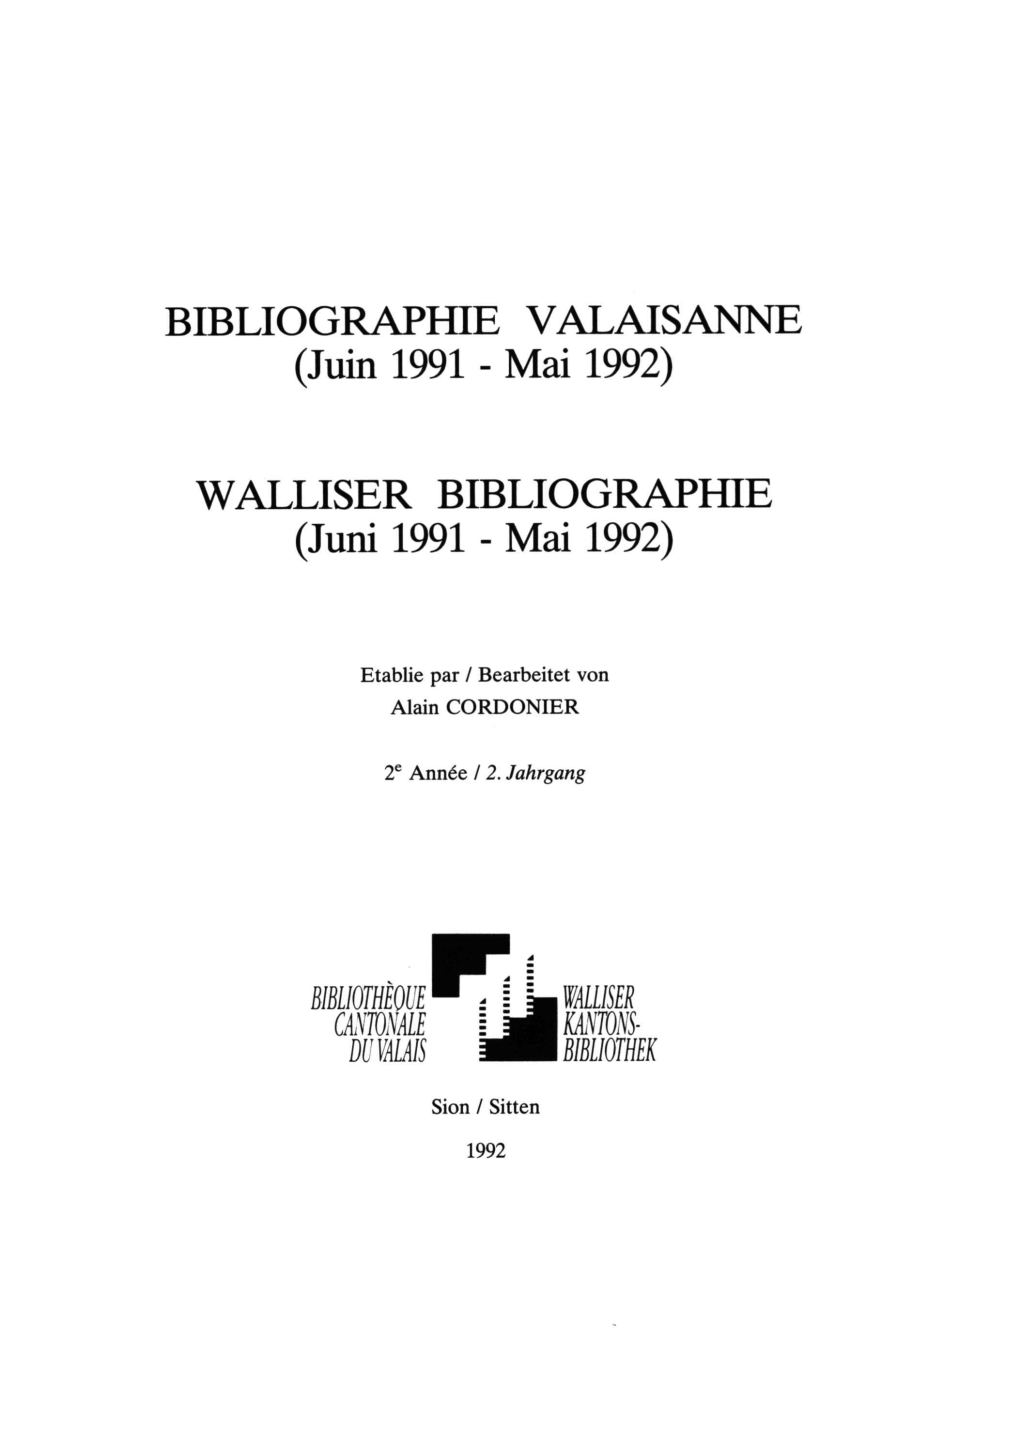 WALLISER BIBLIOGRAPHIE (Juni 1991 - Mai 1992)